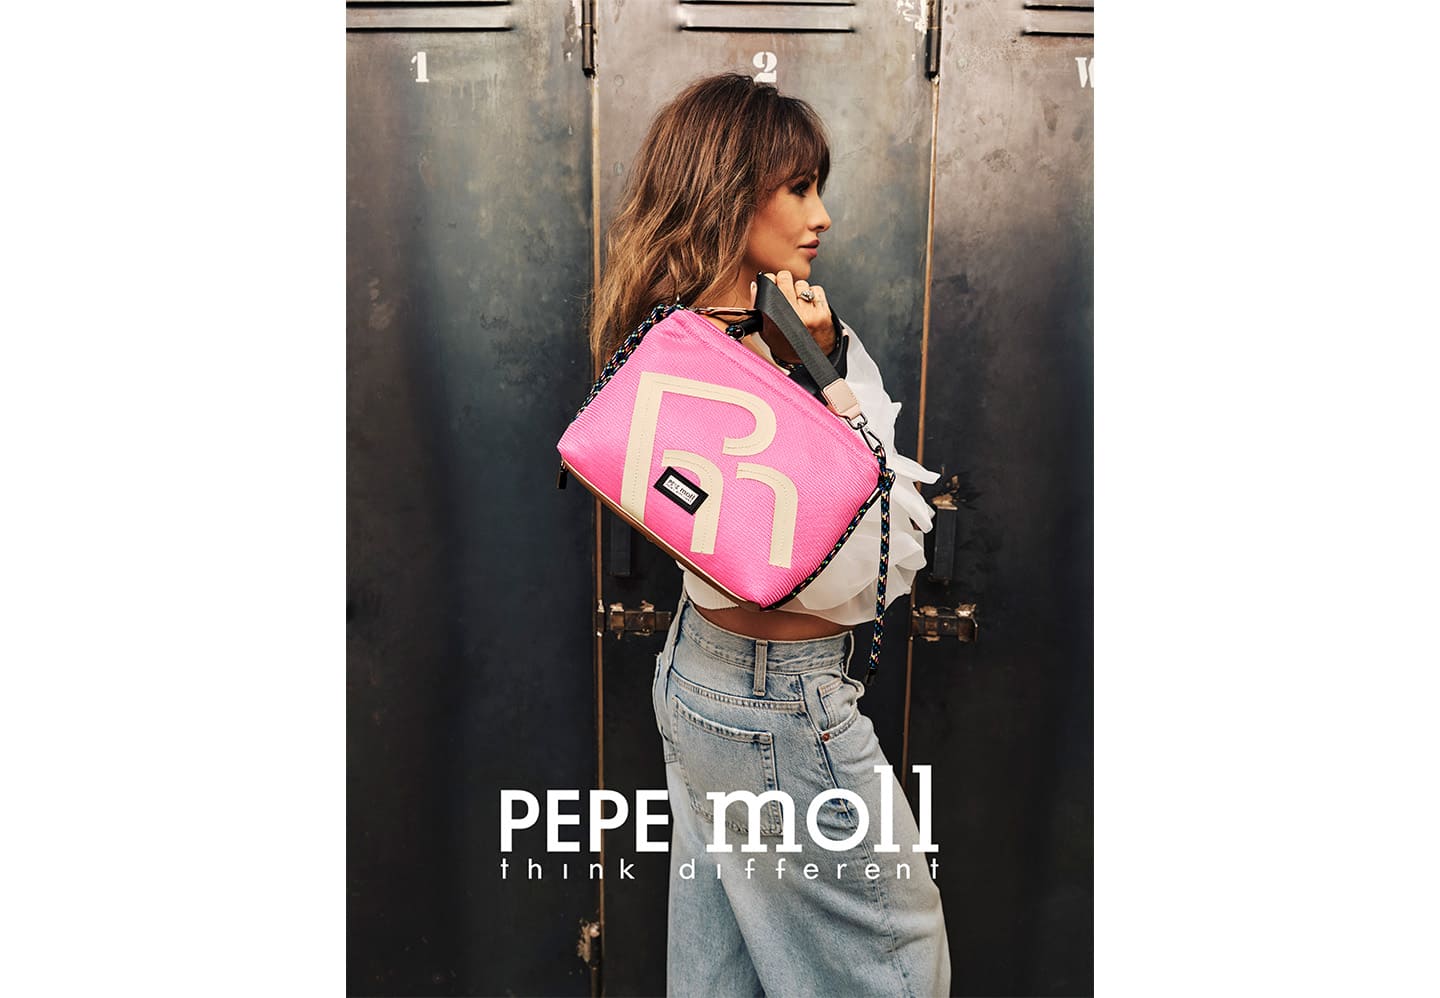 Bolsos Pepe Moll, nueva colección con Mónica Cruz